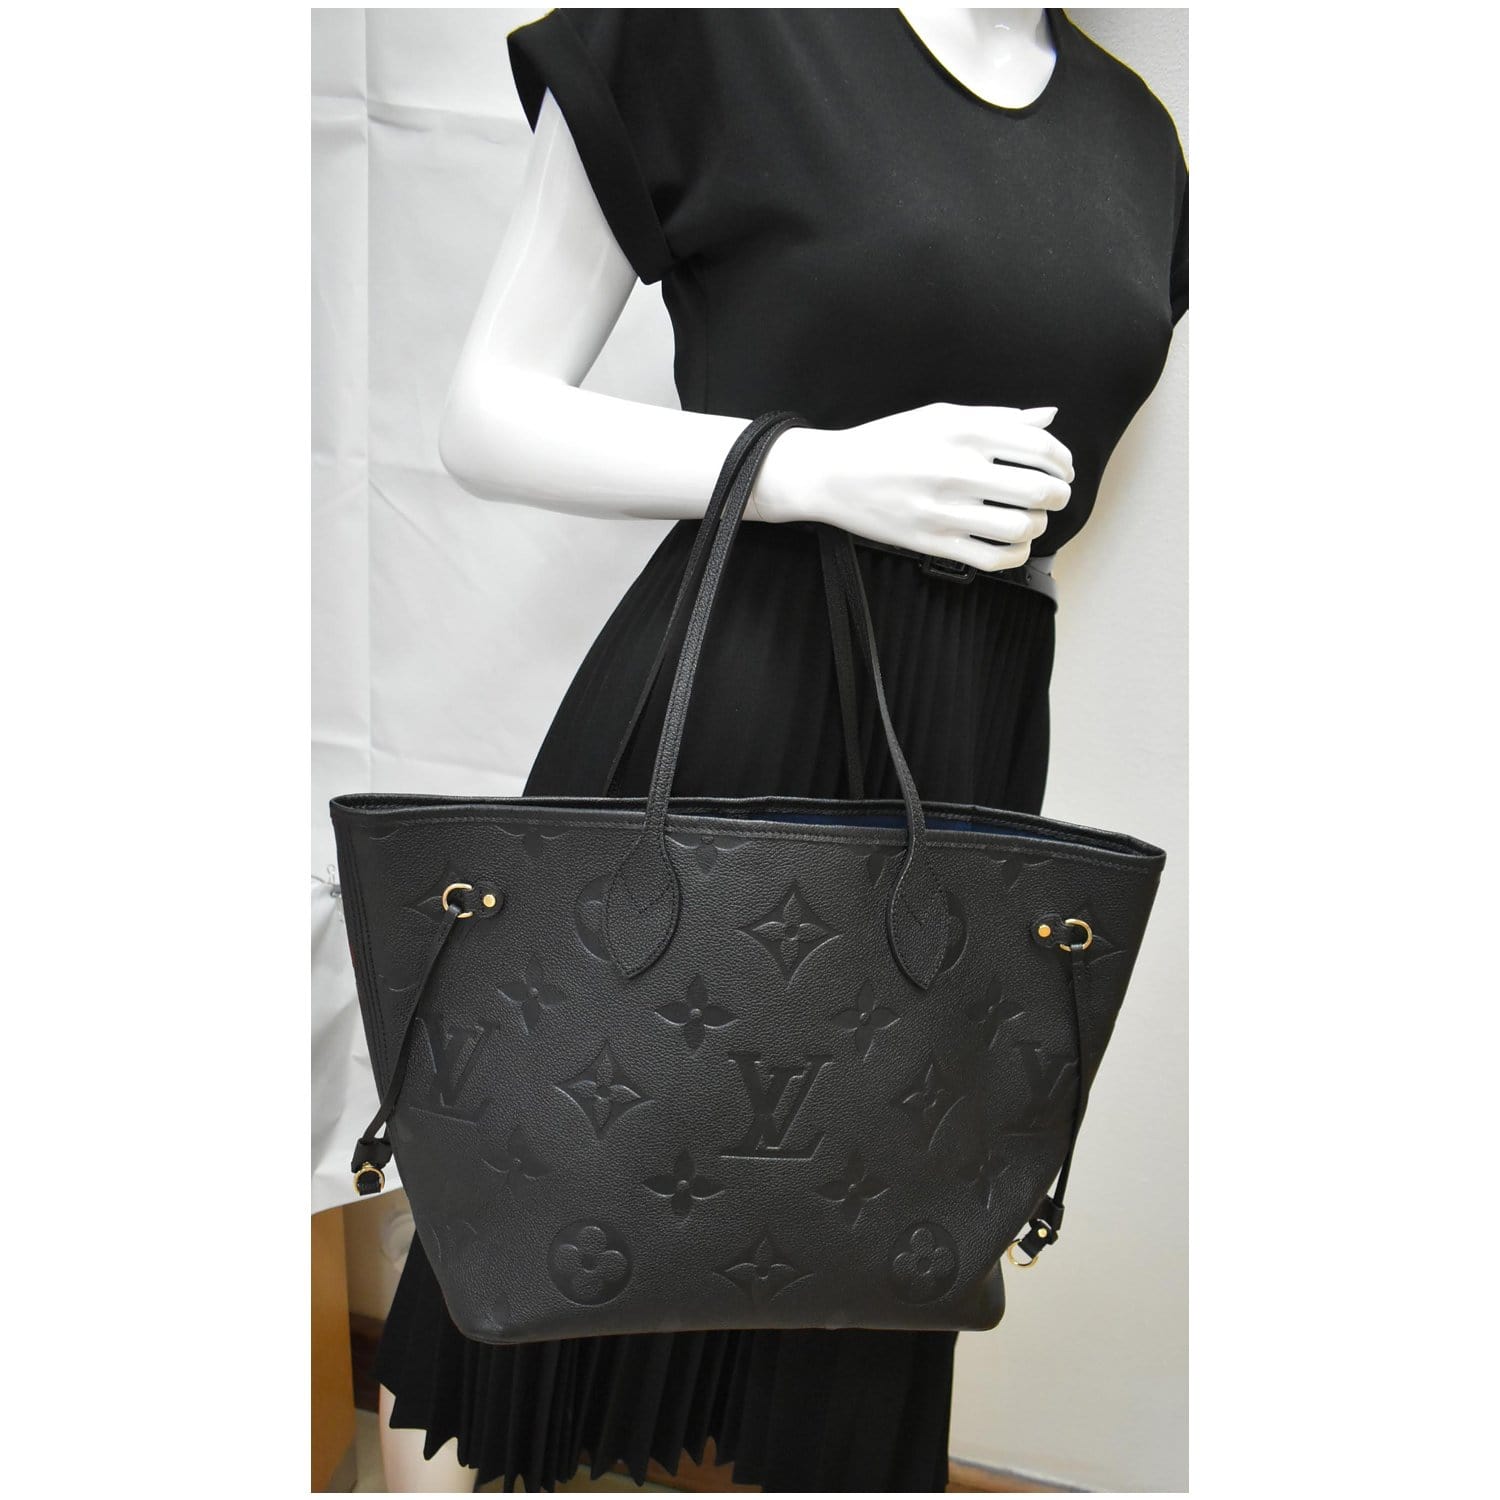 Louis Vuitton Black Tote Bags